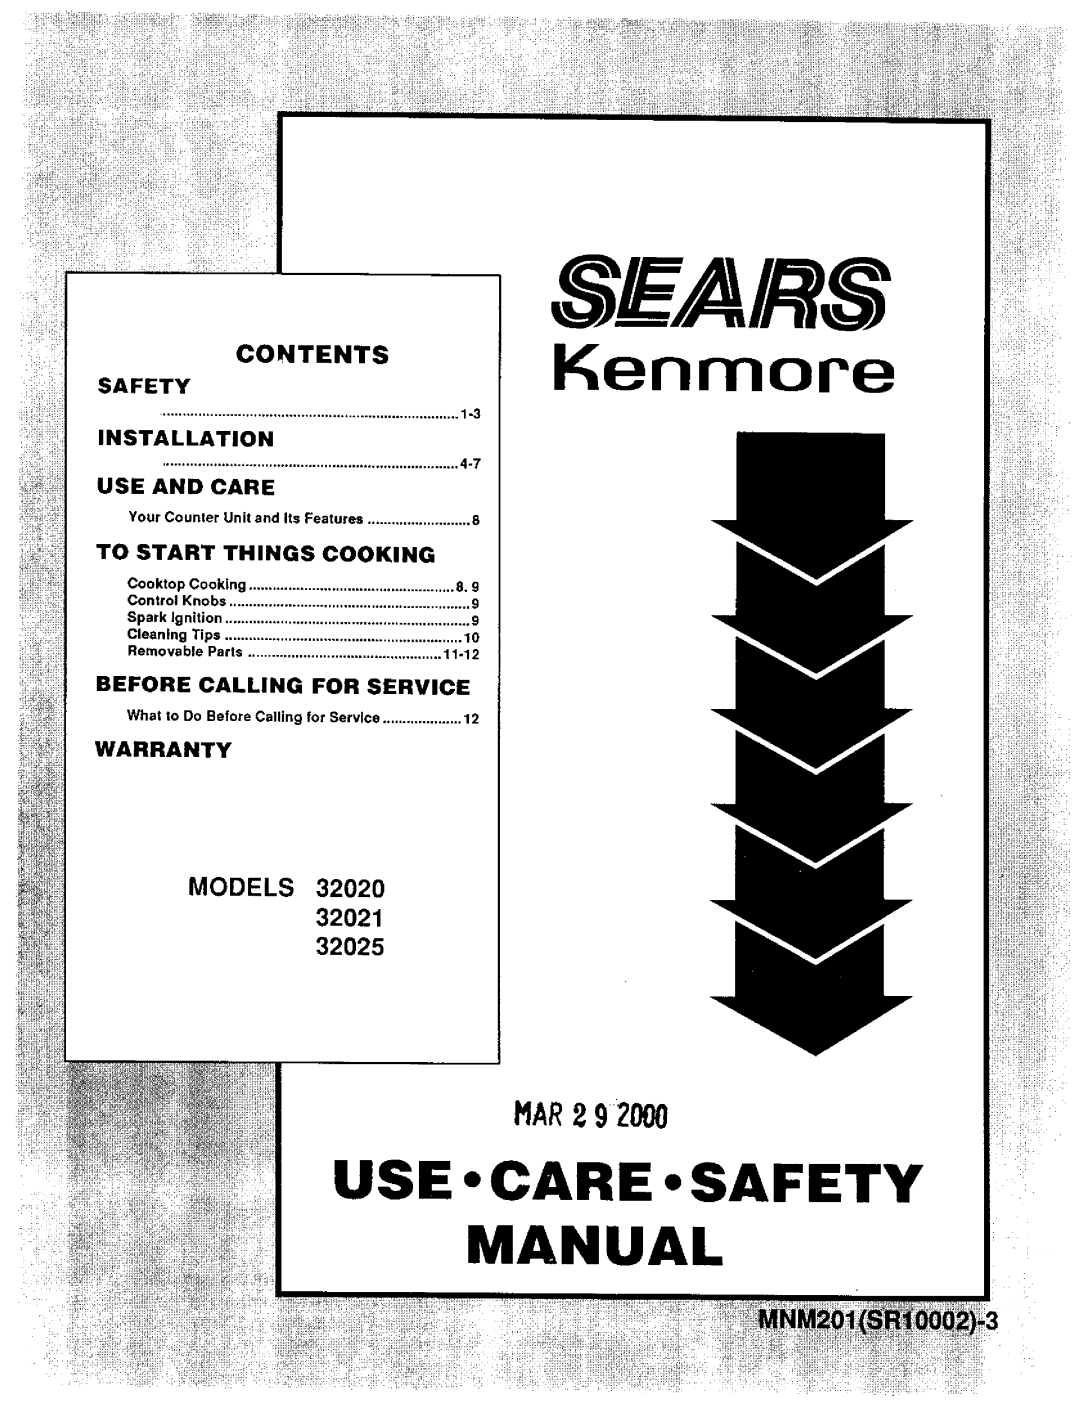 Sears warranty MAR2 9z00e, MODELS 32O2O 32O21, 32025, Sf Airs, Kenmore, Use Care Safety Manual, Installation, Start 